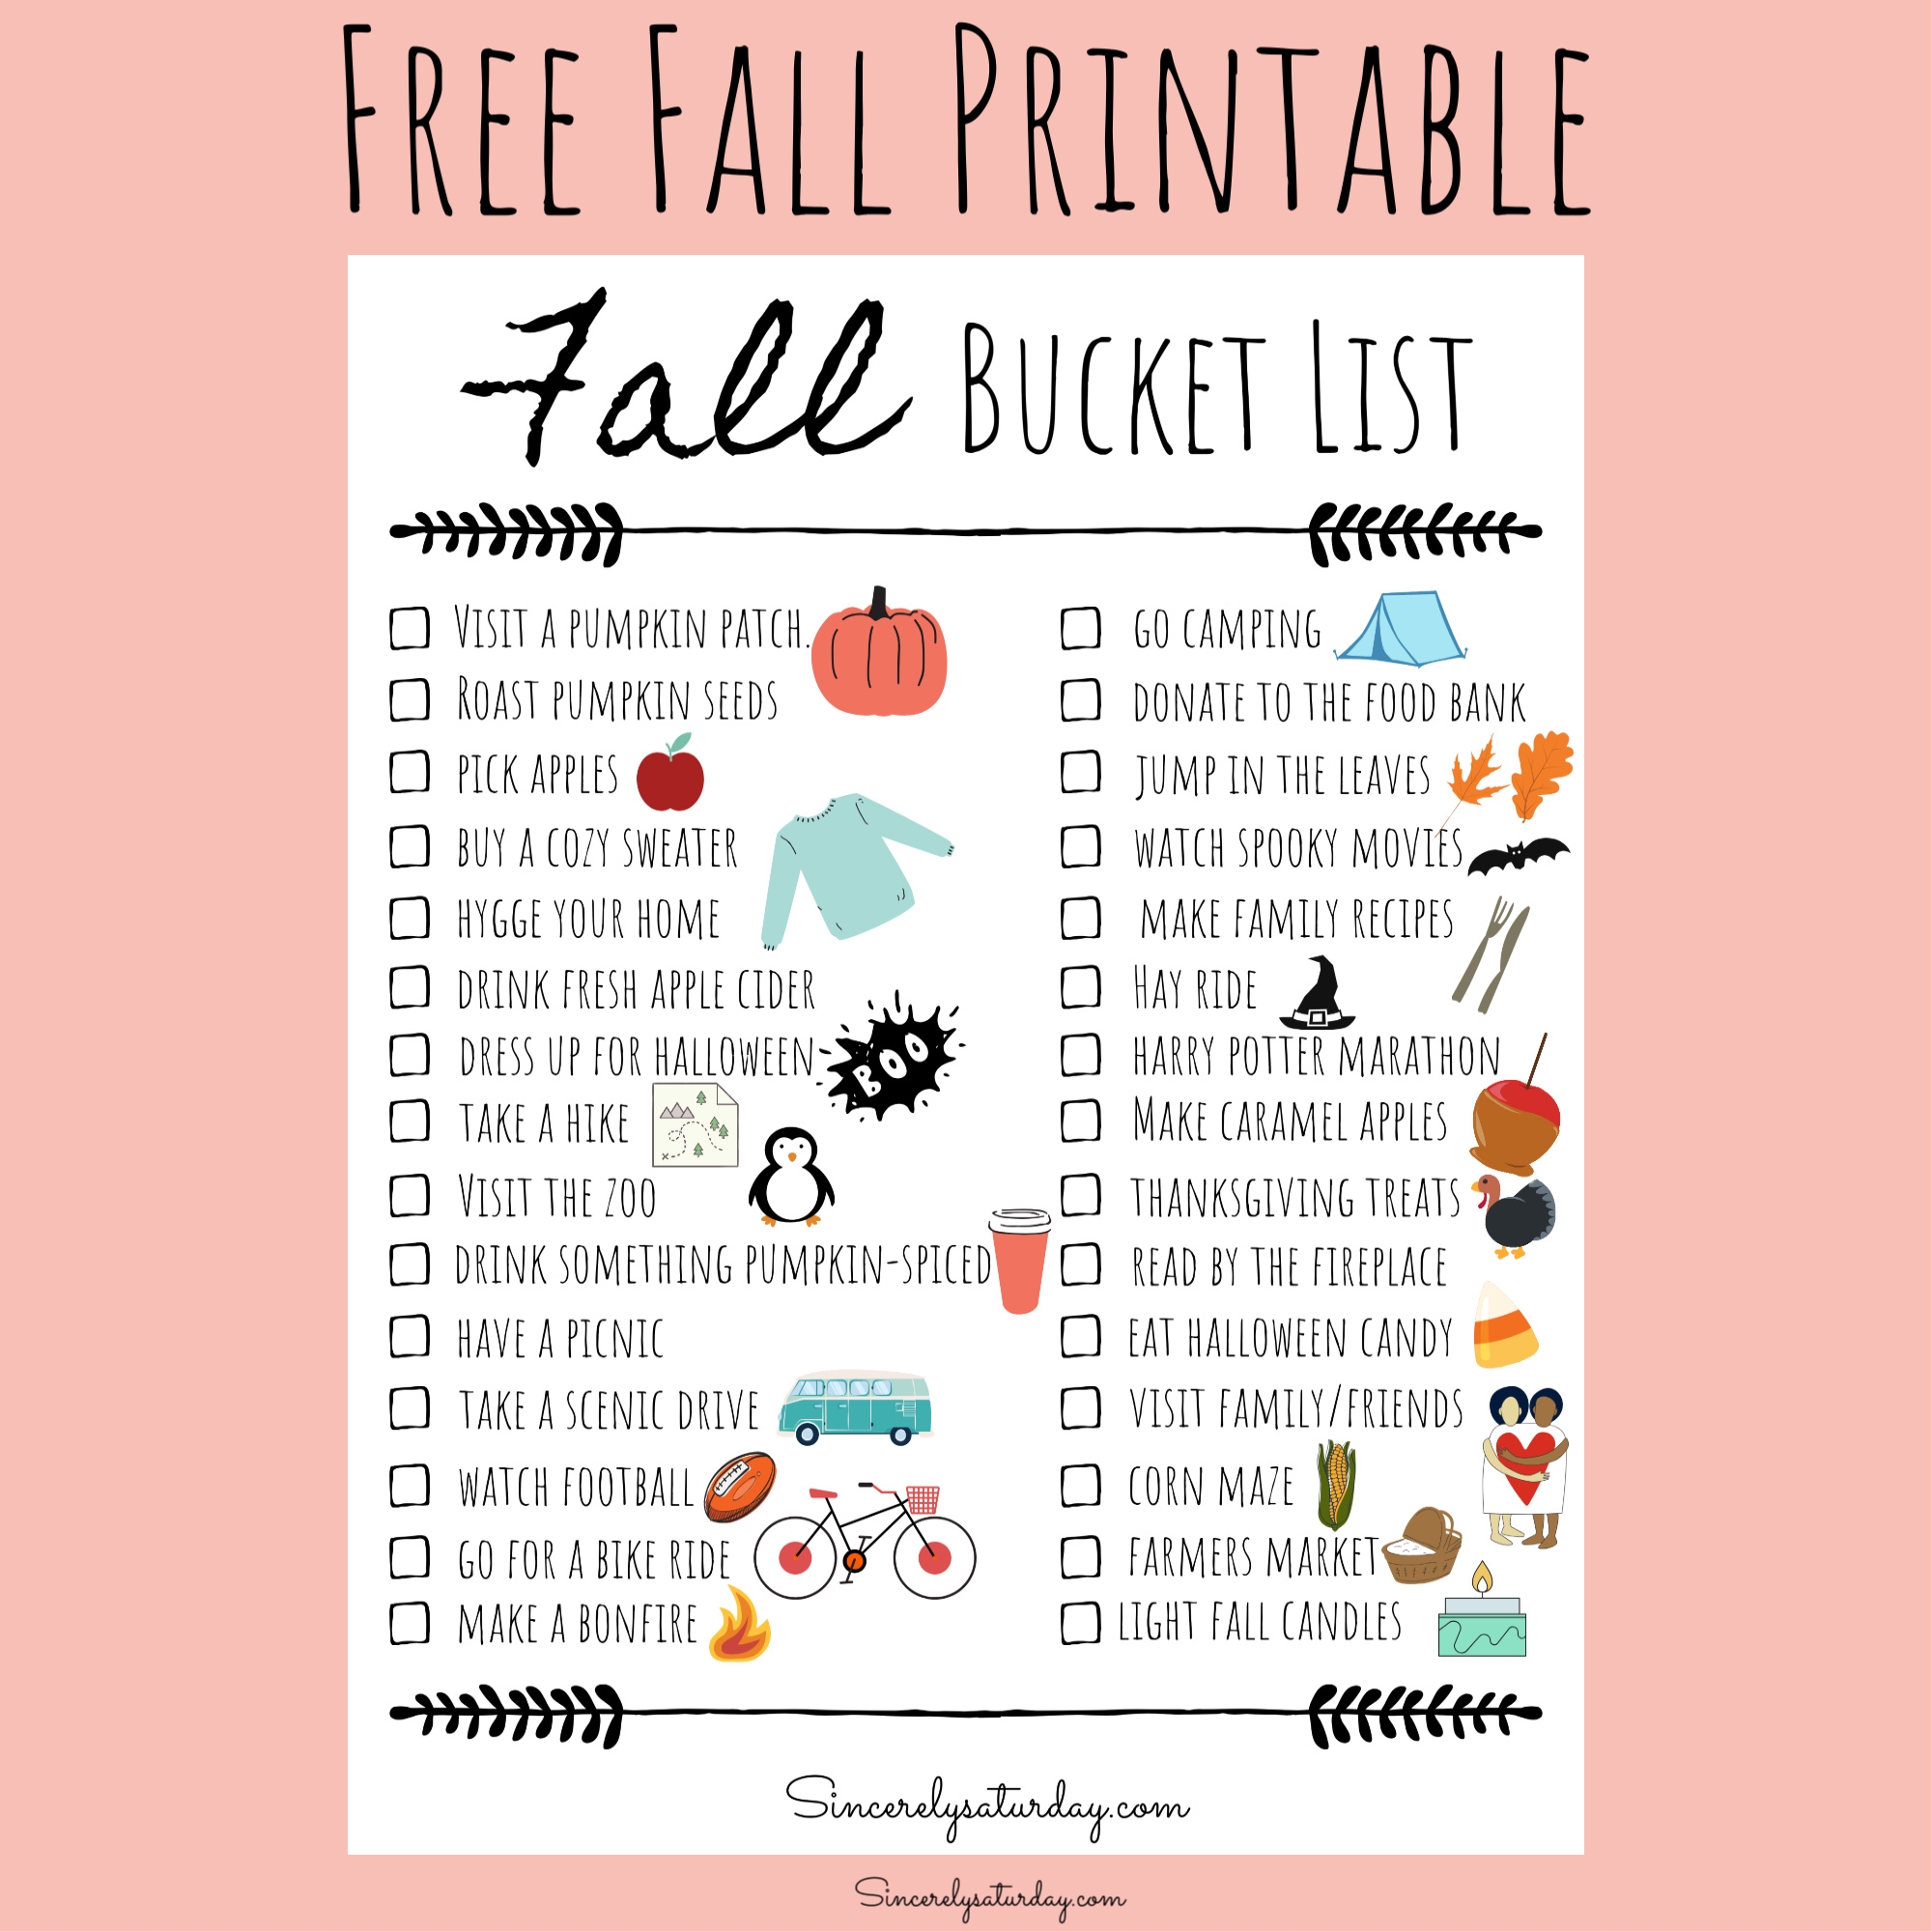 Free fall printable